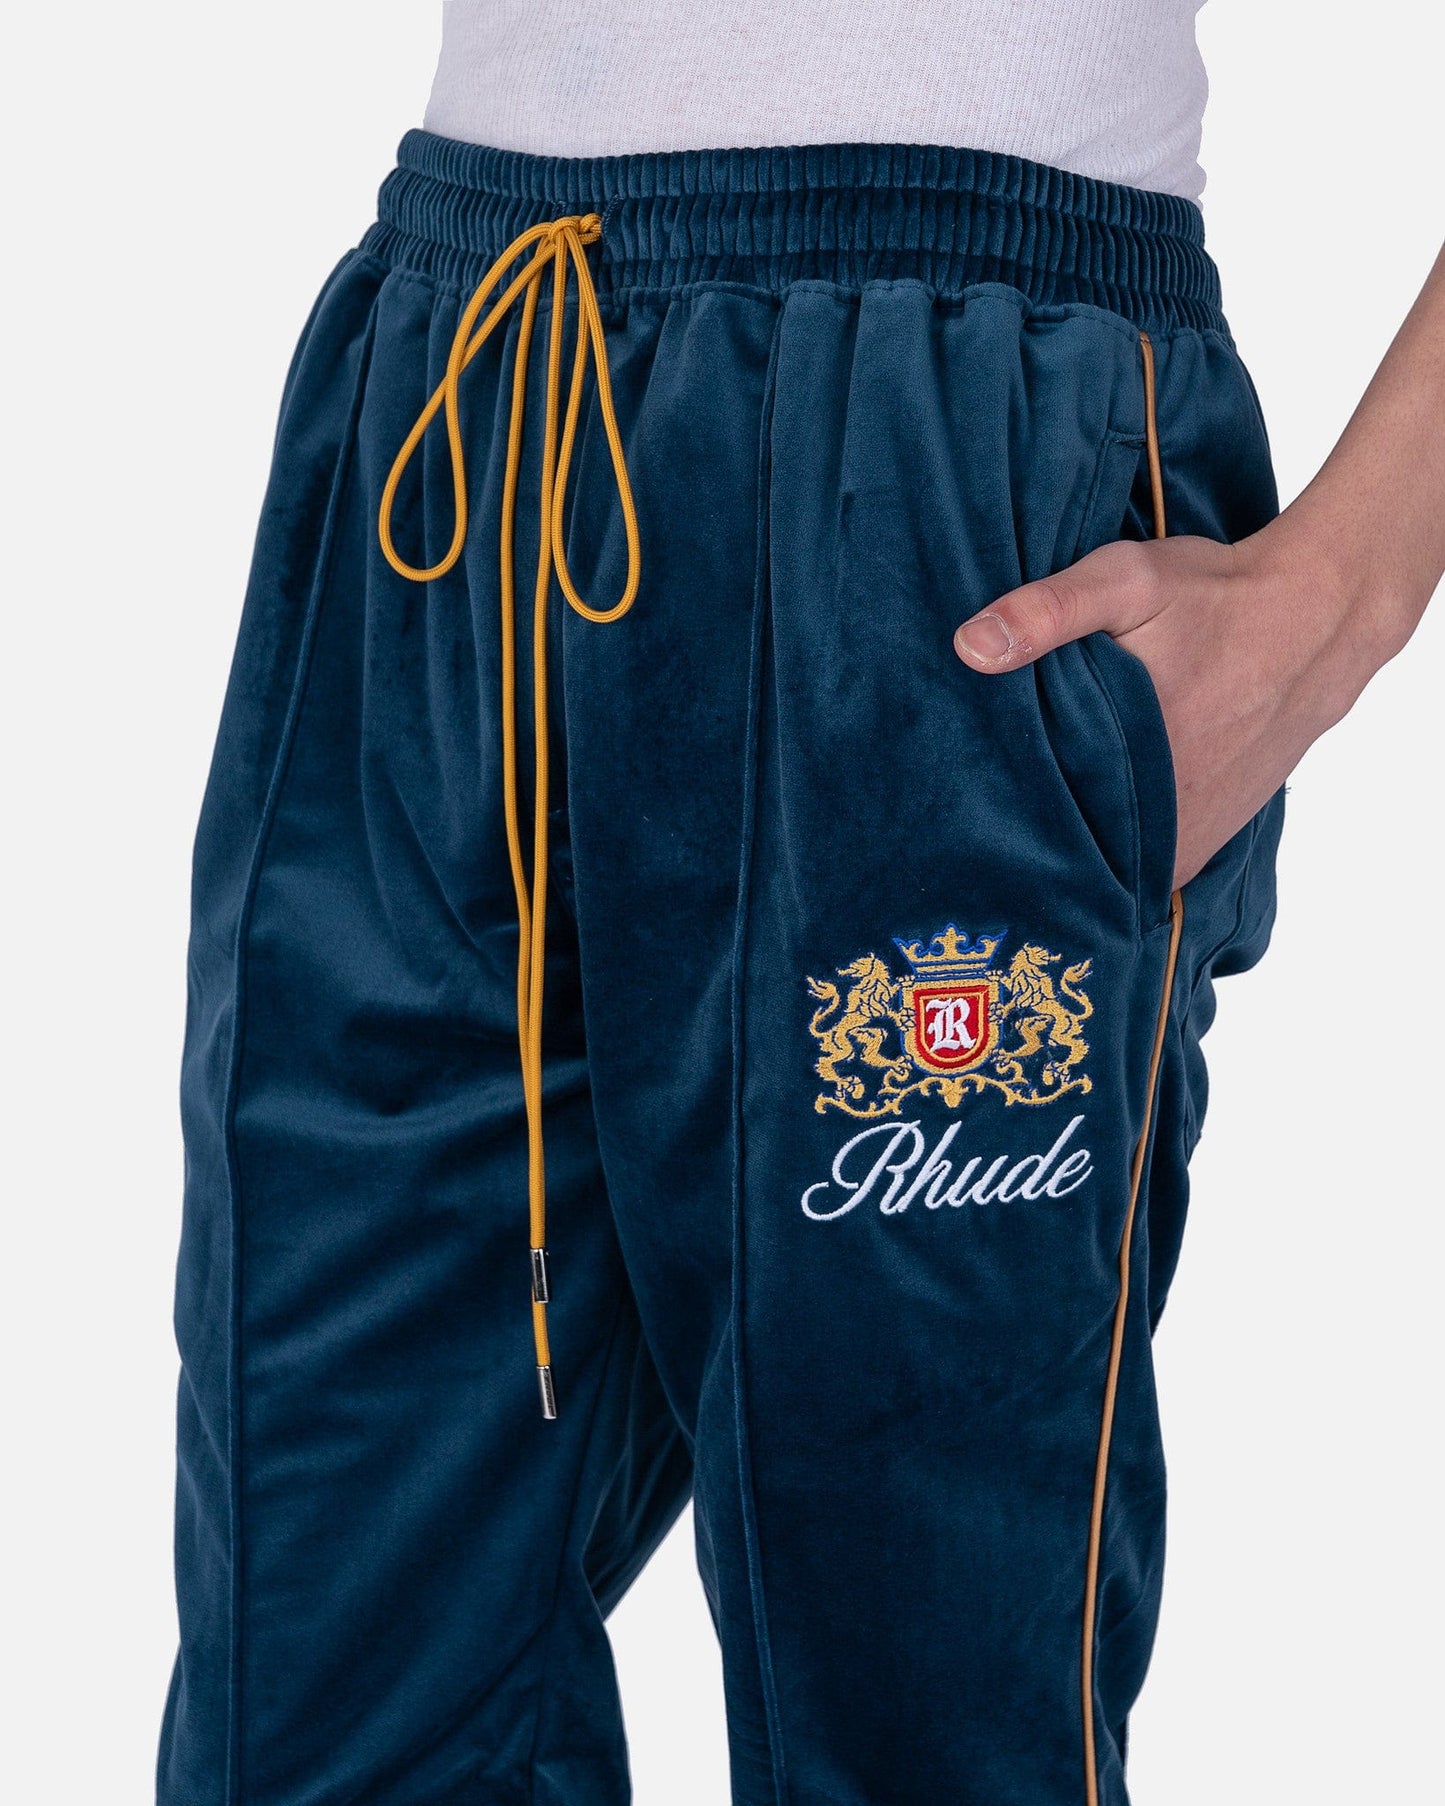 Rhude Men's Pants Velour Lounge Pant in Slate